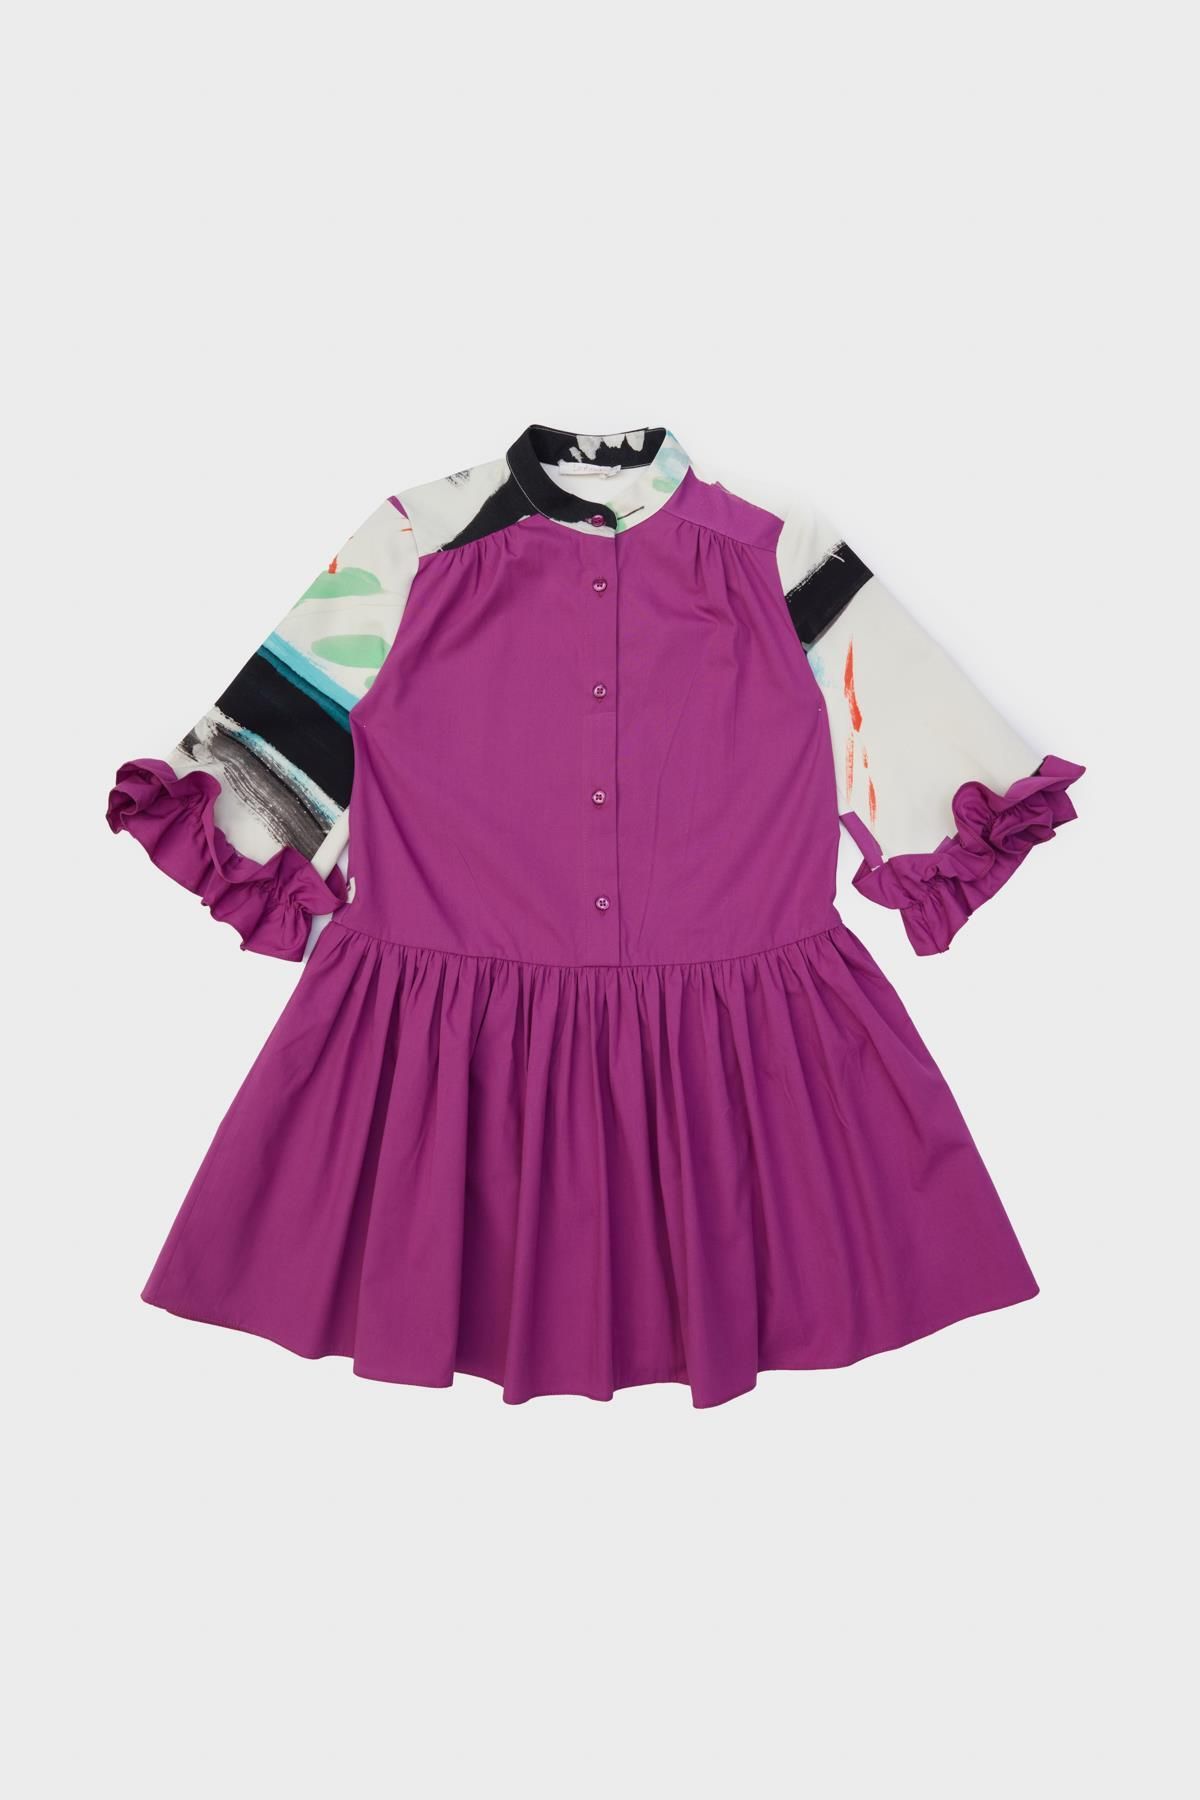 Lia Lea Bg Store Kız Çocuk Mor Elbise 23pfwl02005